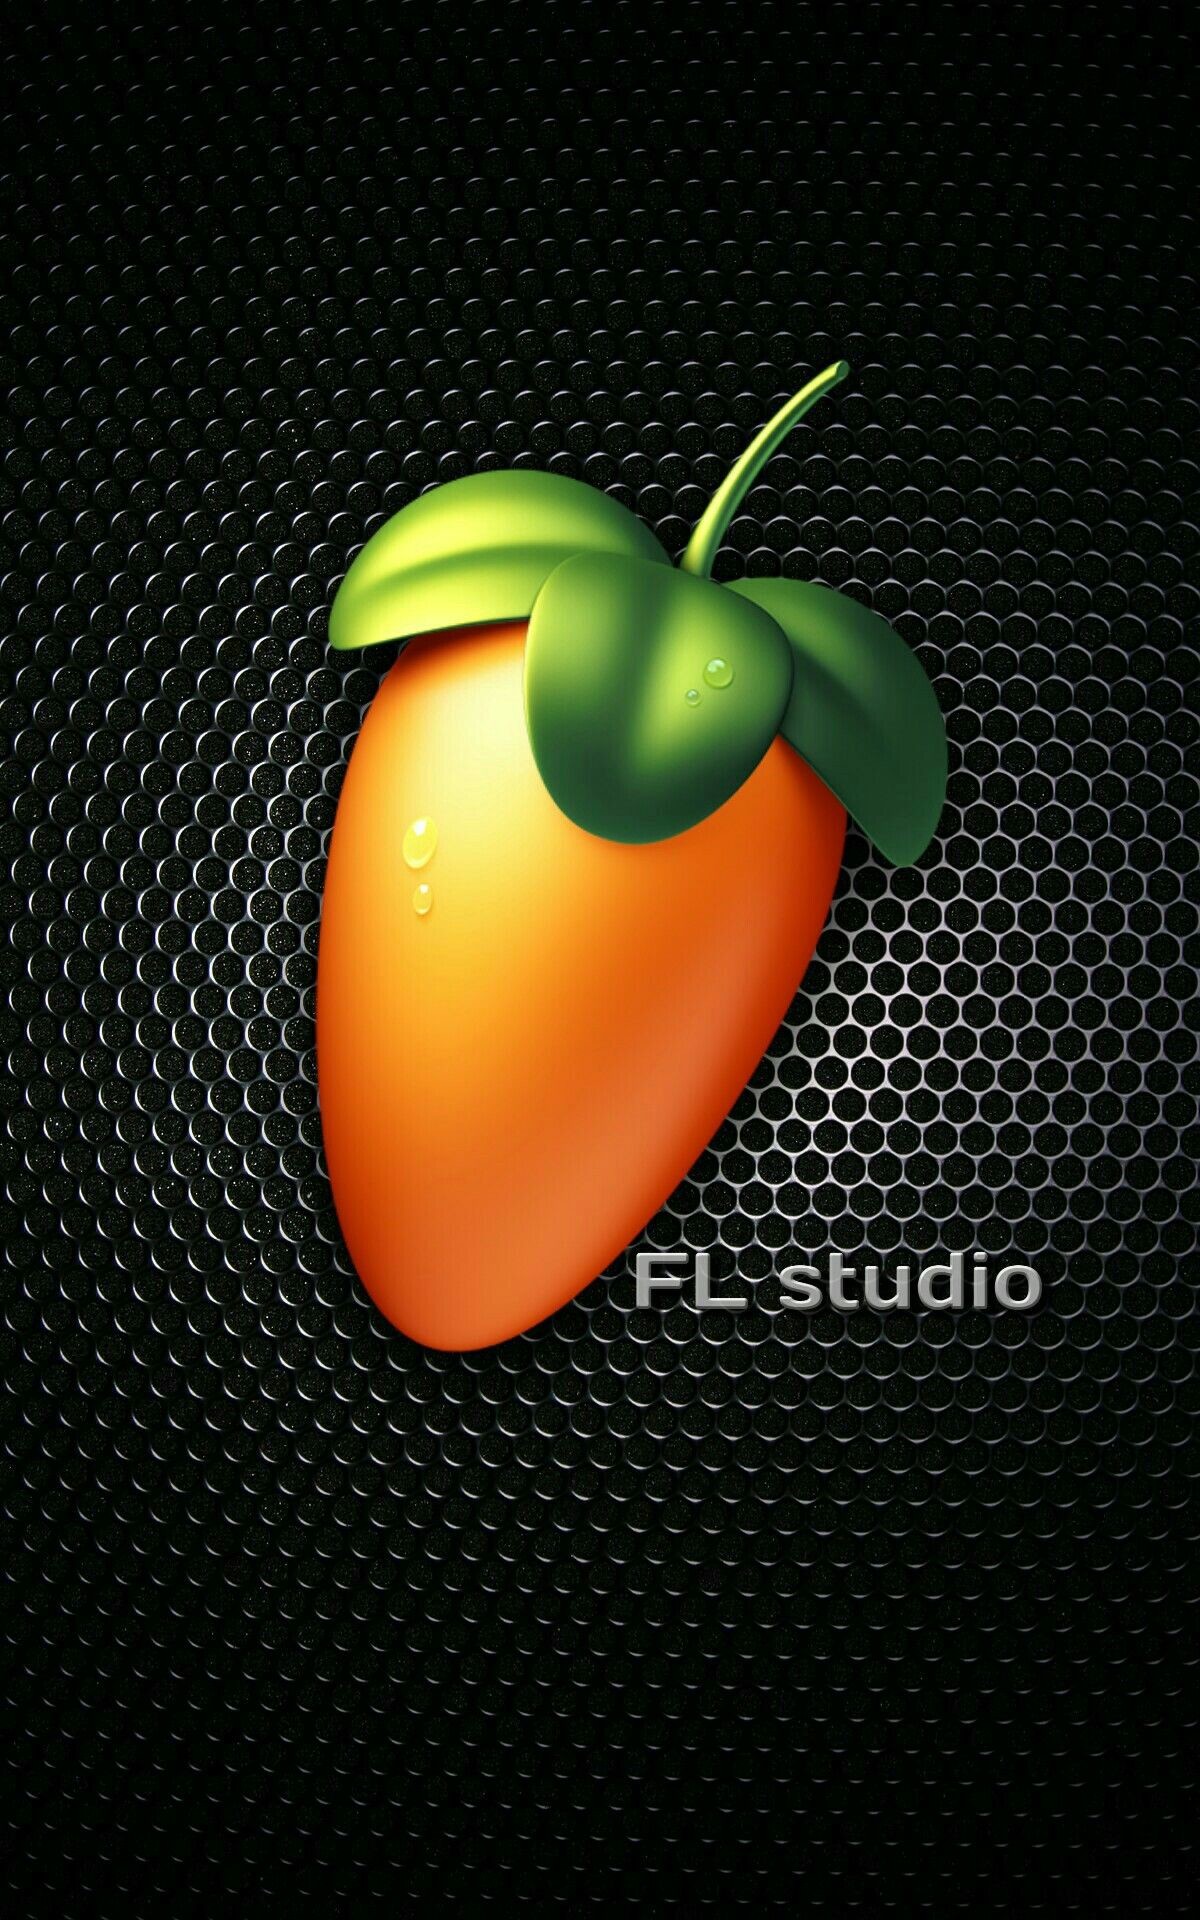 1200x1920 FL studio wallpaper HD mobile Homescreen, Backgrounds